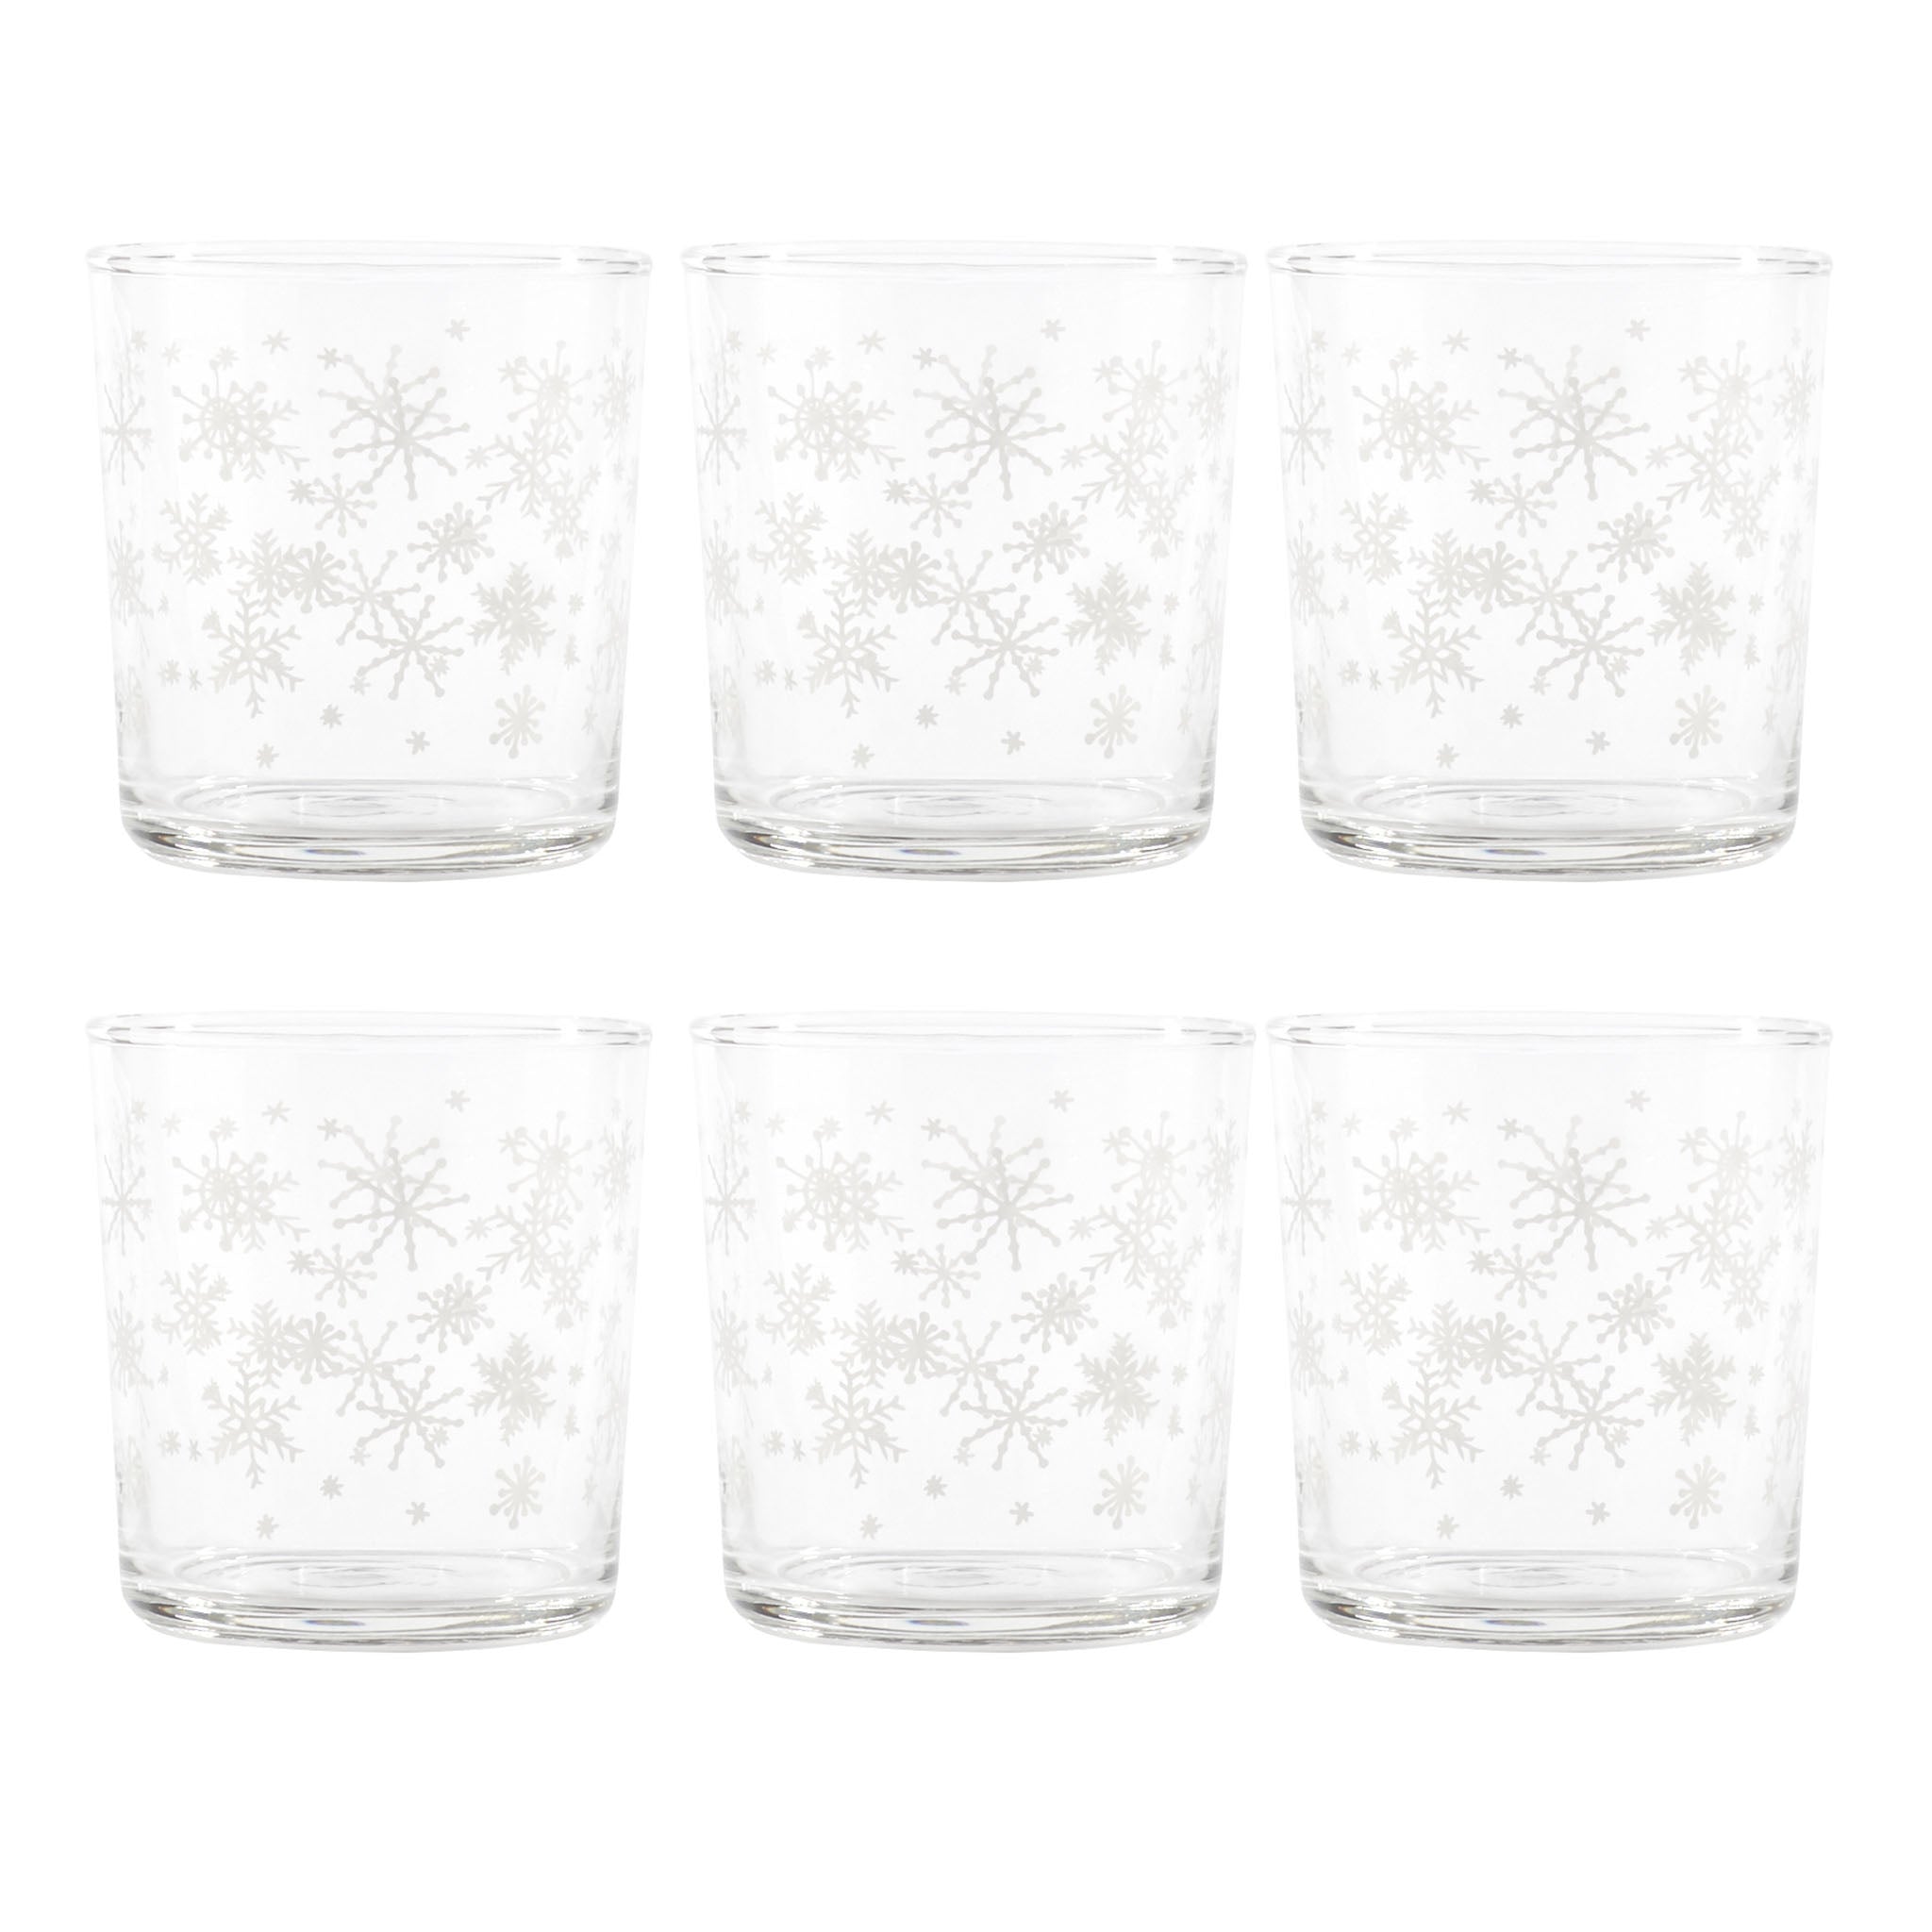 Set 6 snow water glasses